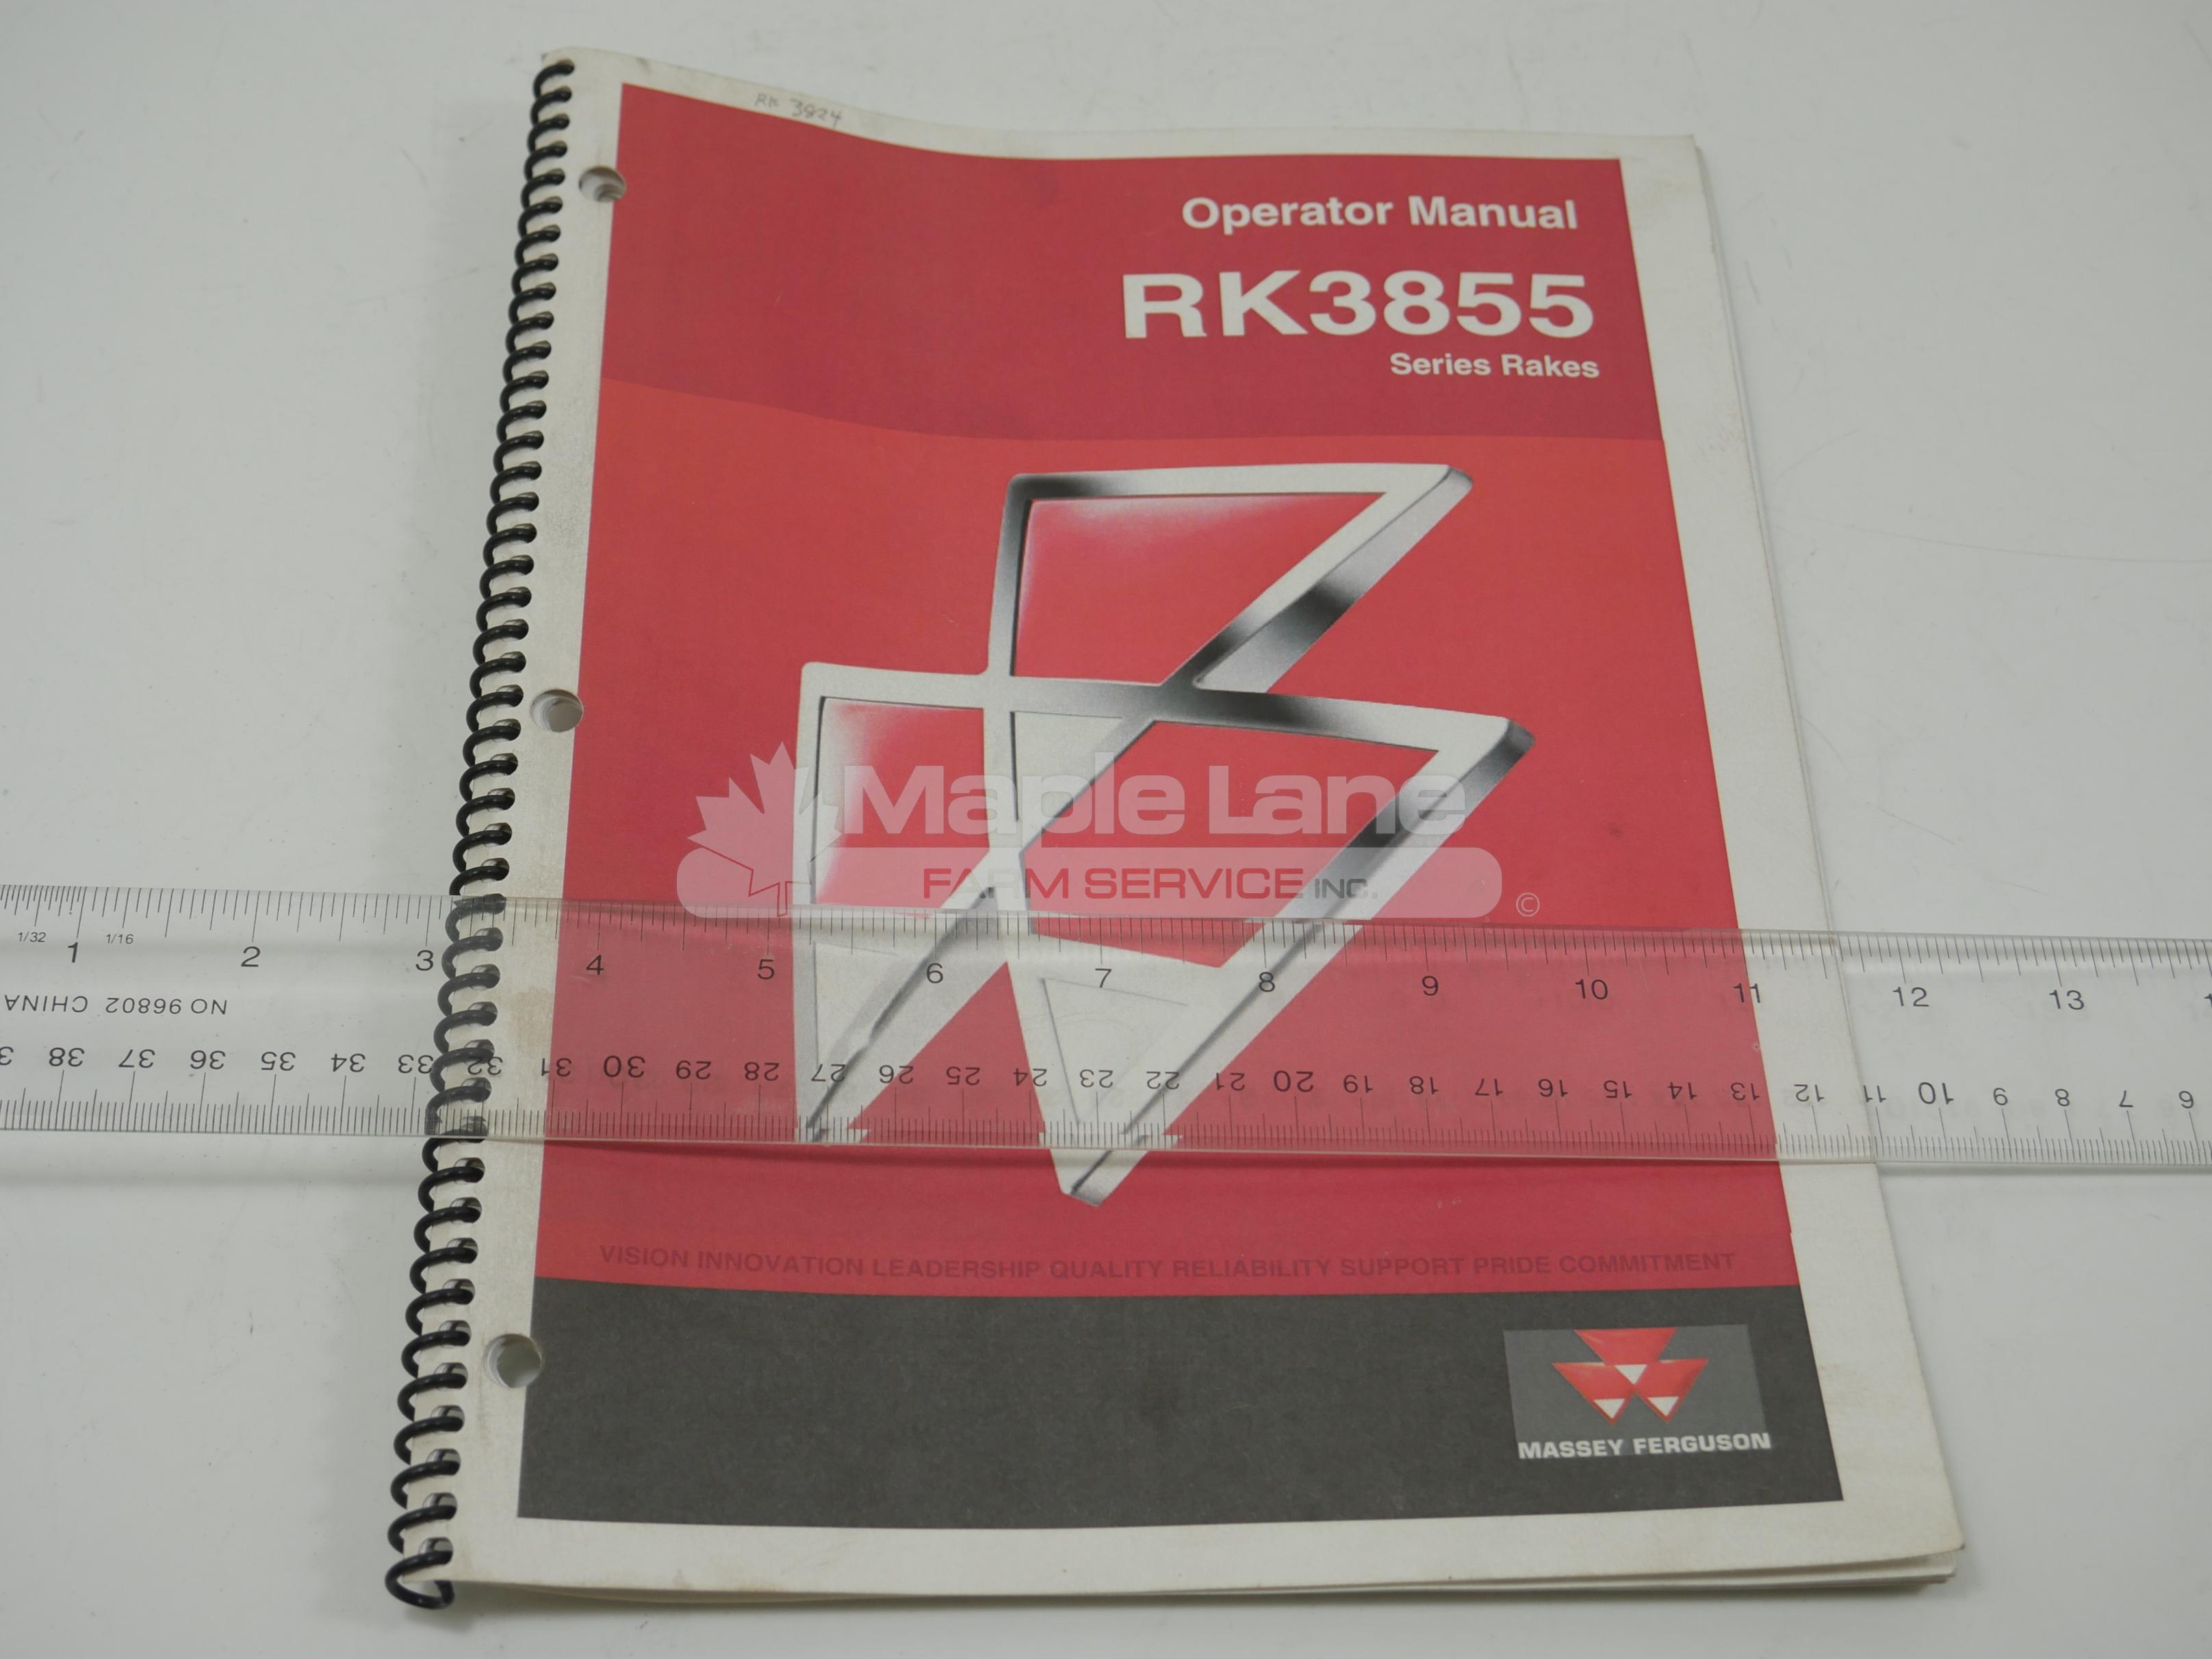 FEL128833A RK3855 Operator Manual